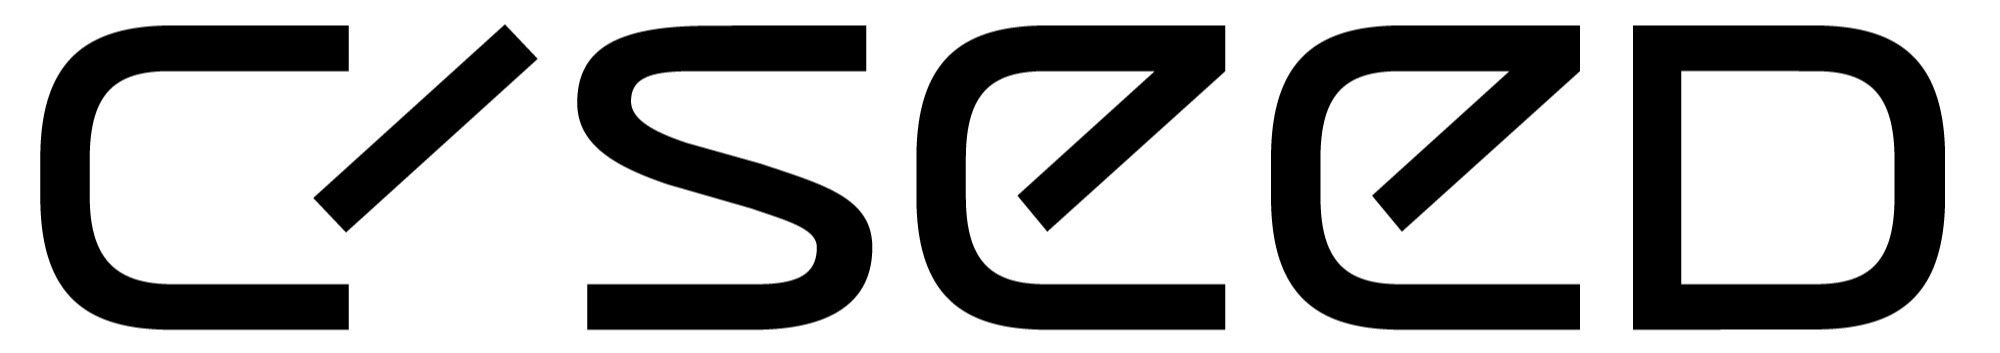 C+SEED+Logo.jpg